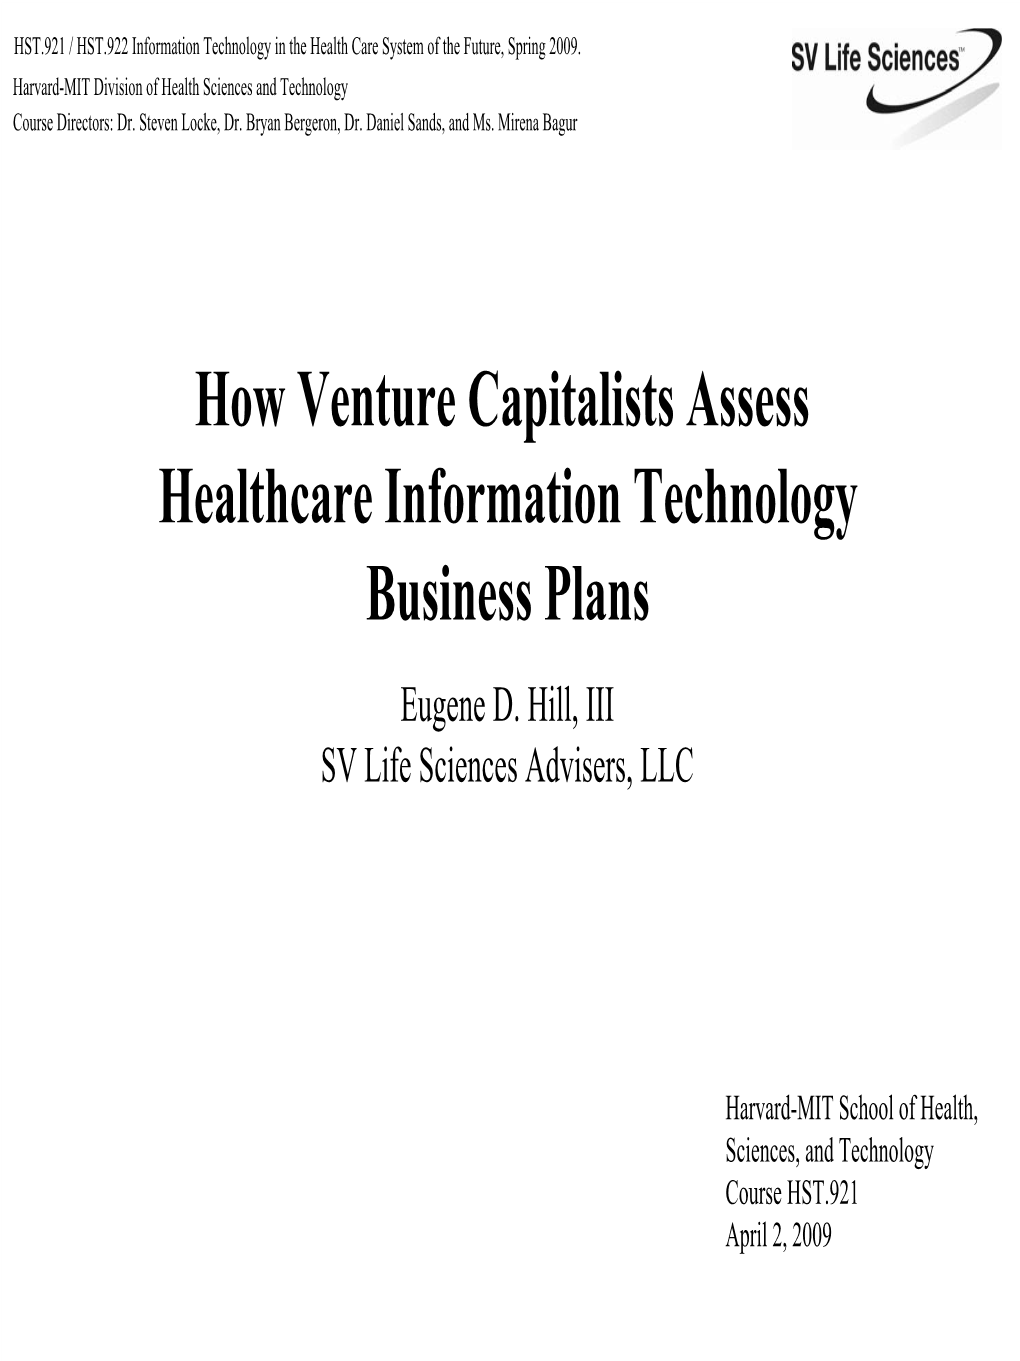 How Venture Capitalists Assess Healthcare Information Technology Business Plans Eugene D